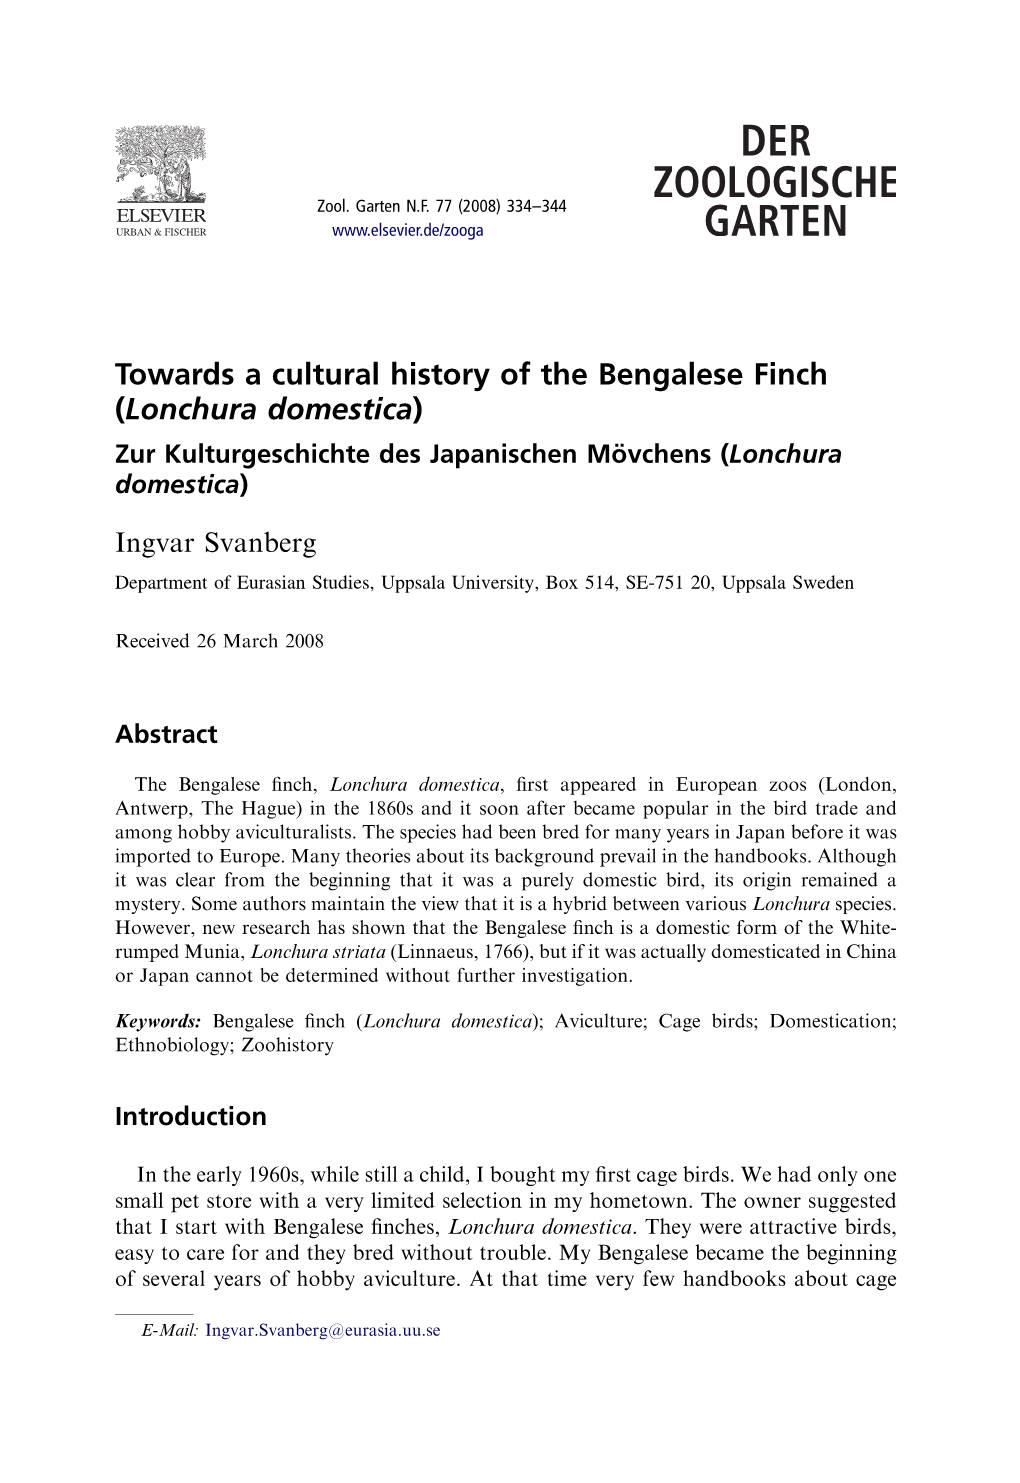 Towards a Cultural History of the Bengalese Finch (Lonchura Domestica) Zur Kulturgeschichte Des Japanischen Mo¨ Vchens (Lonchura Domestica)